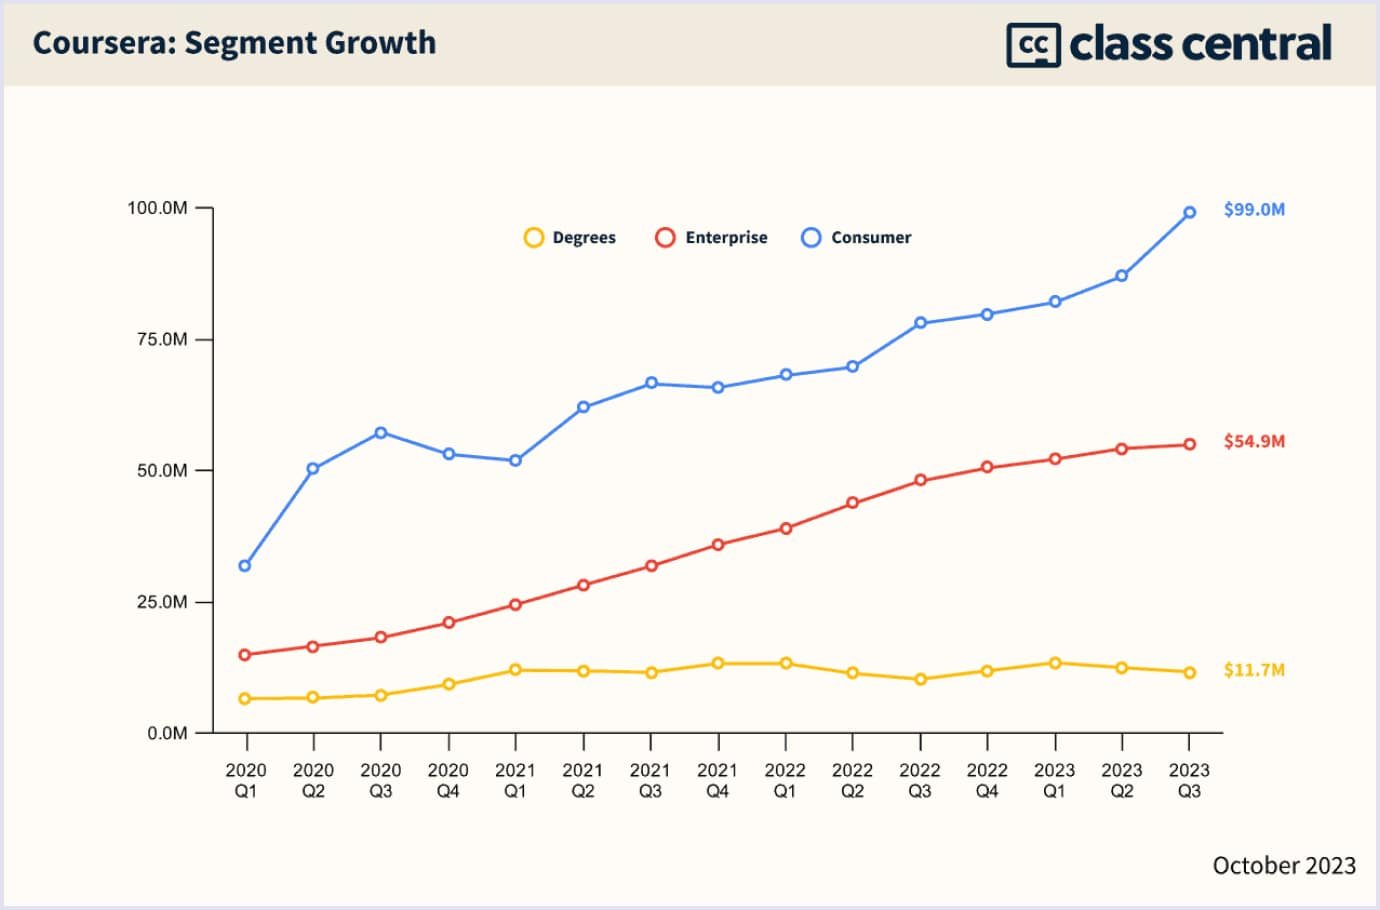 Coursera segment growth in 2023